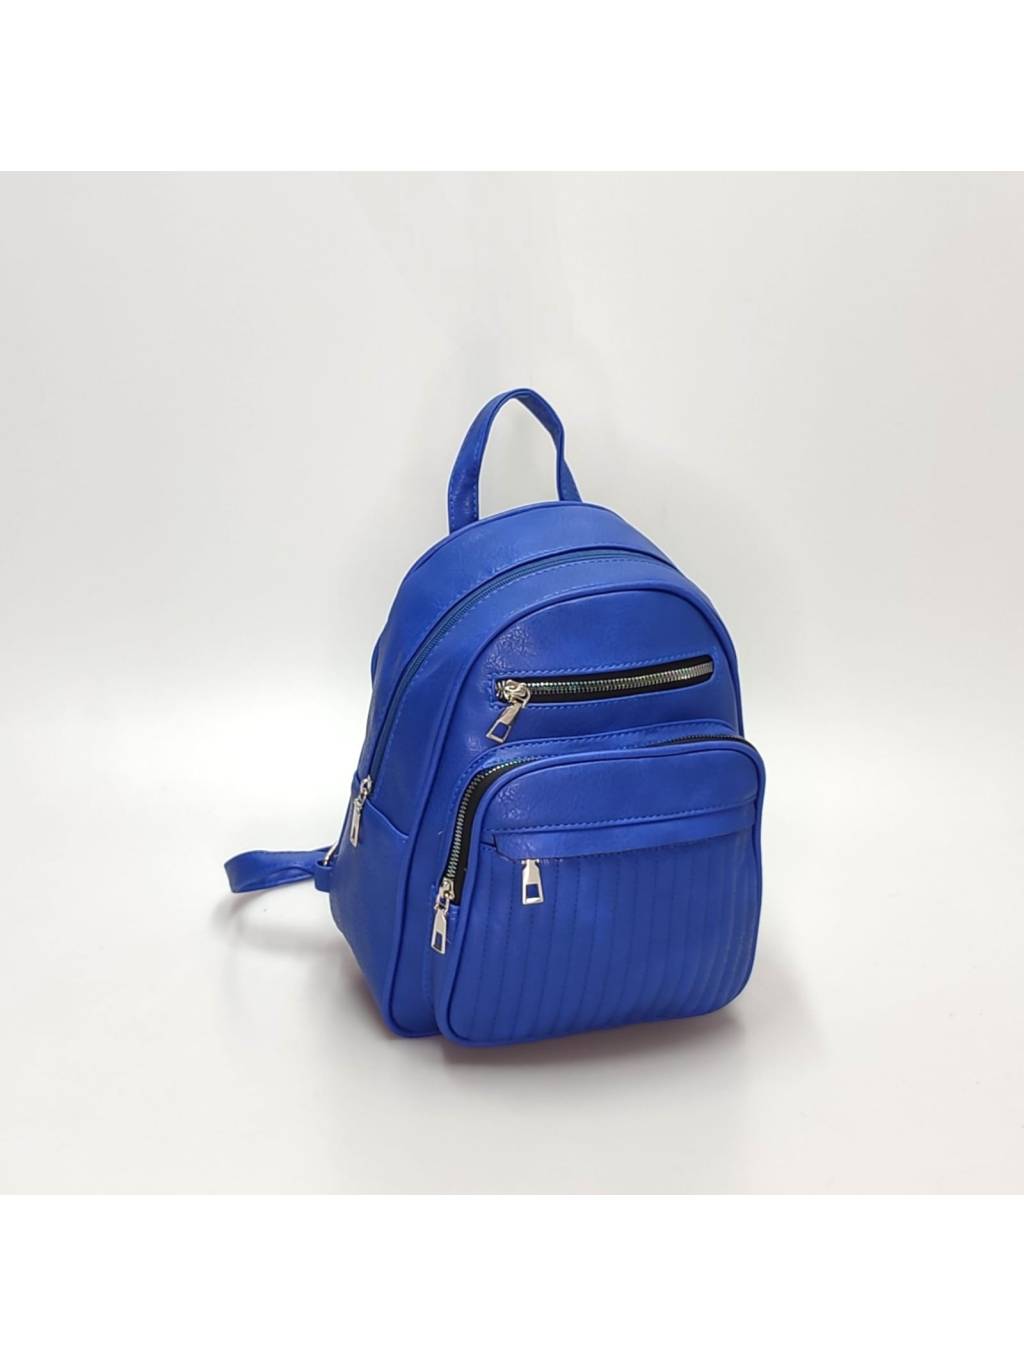 Dámsky ruksak DL0185 modrý www.kabelky vypredaj (30)